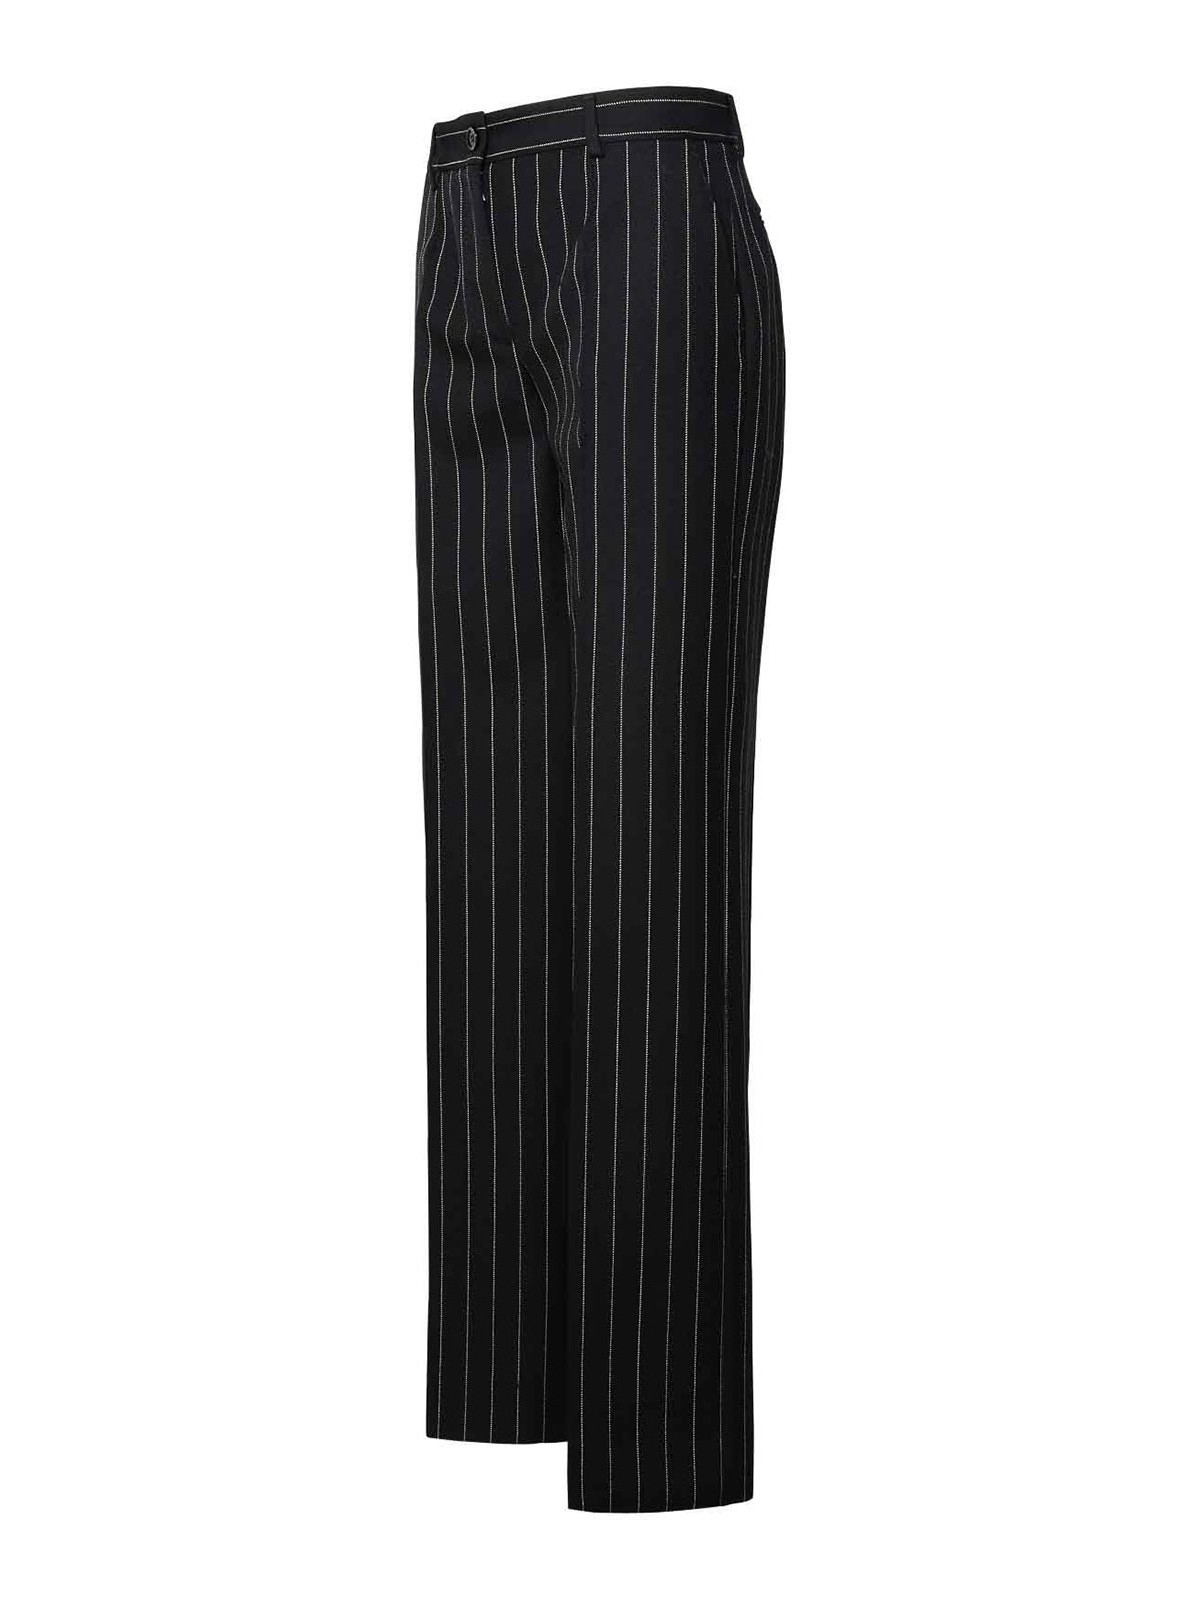 Shop Dolce & Gabbana Black Virgin Wool Trousers